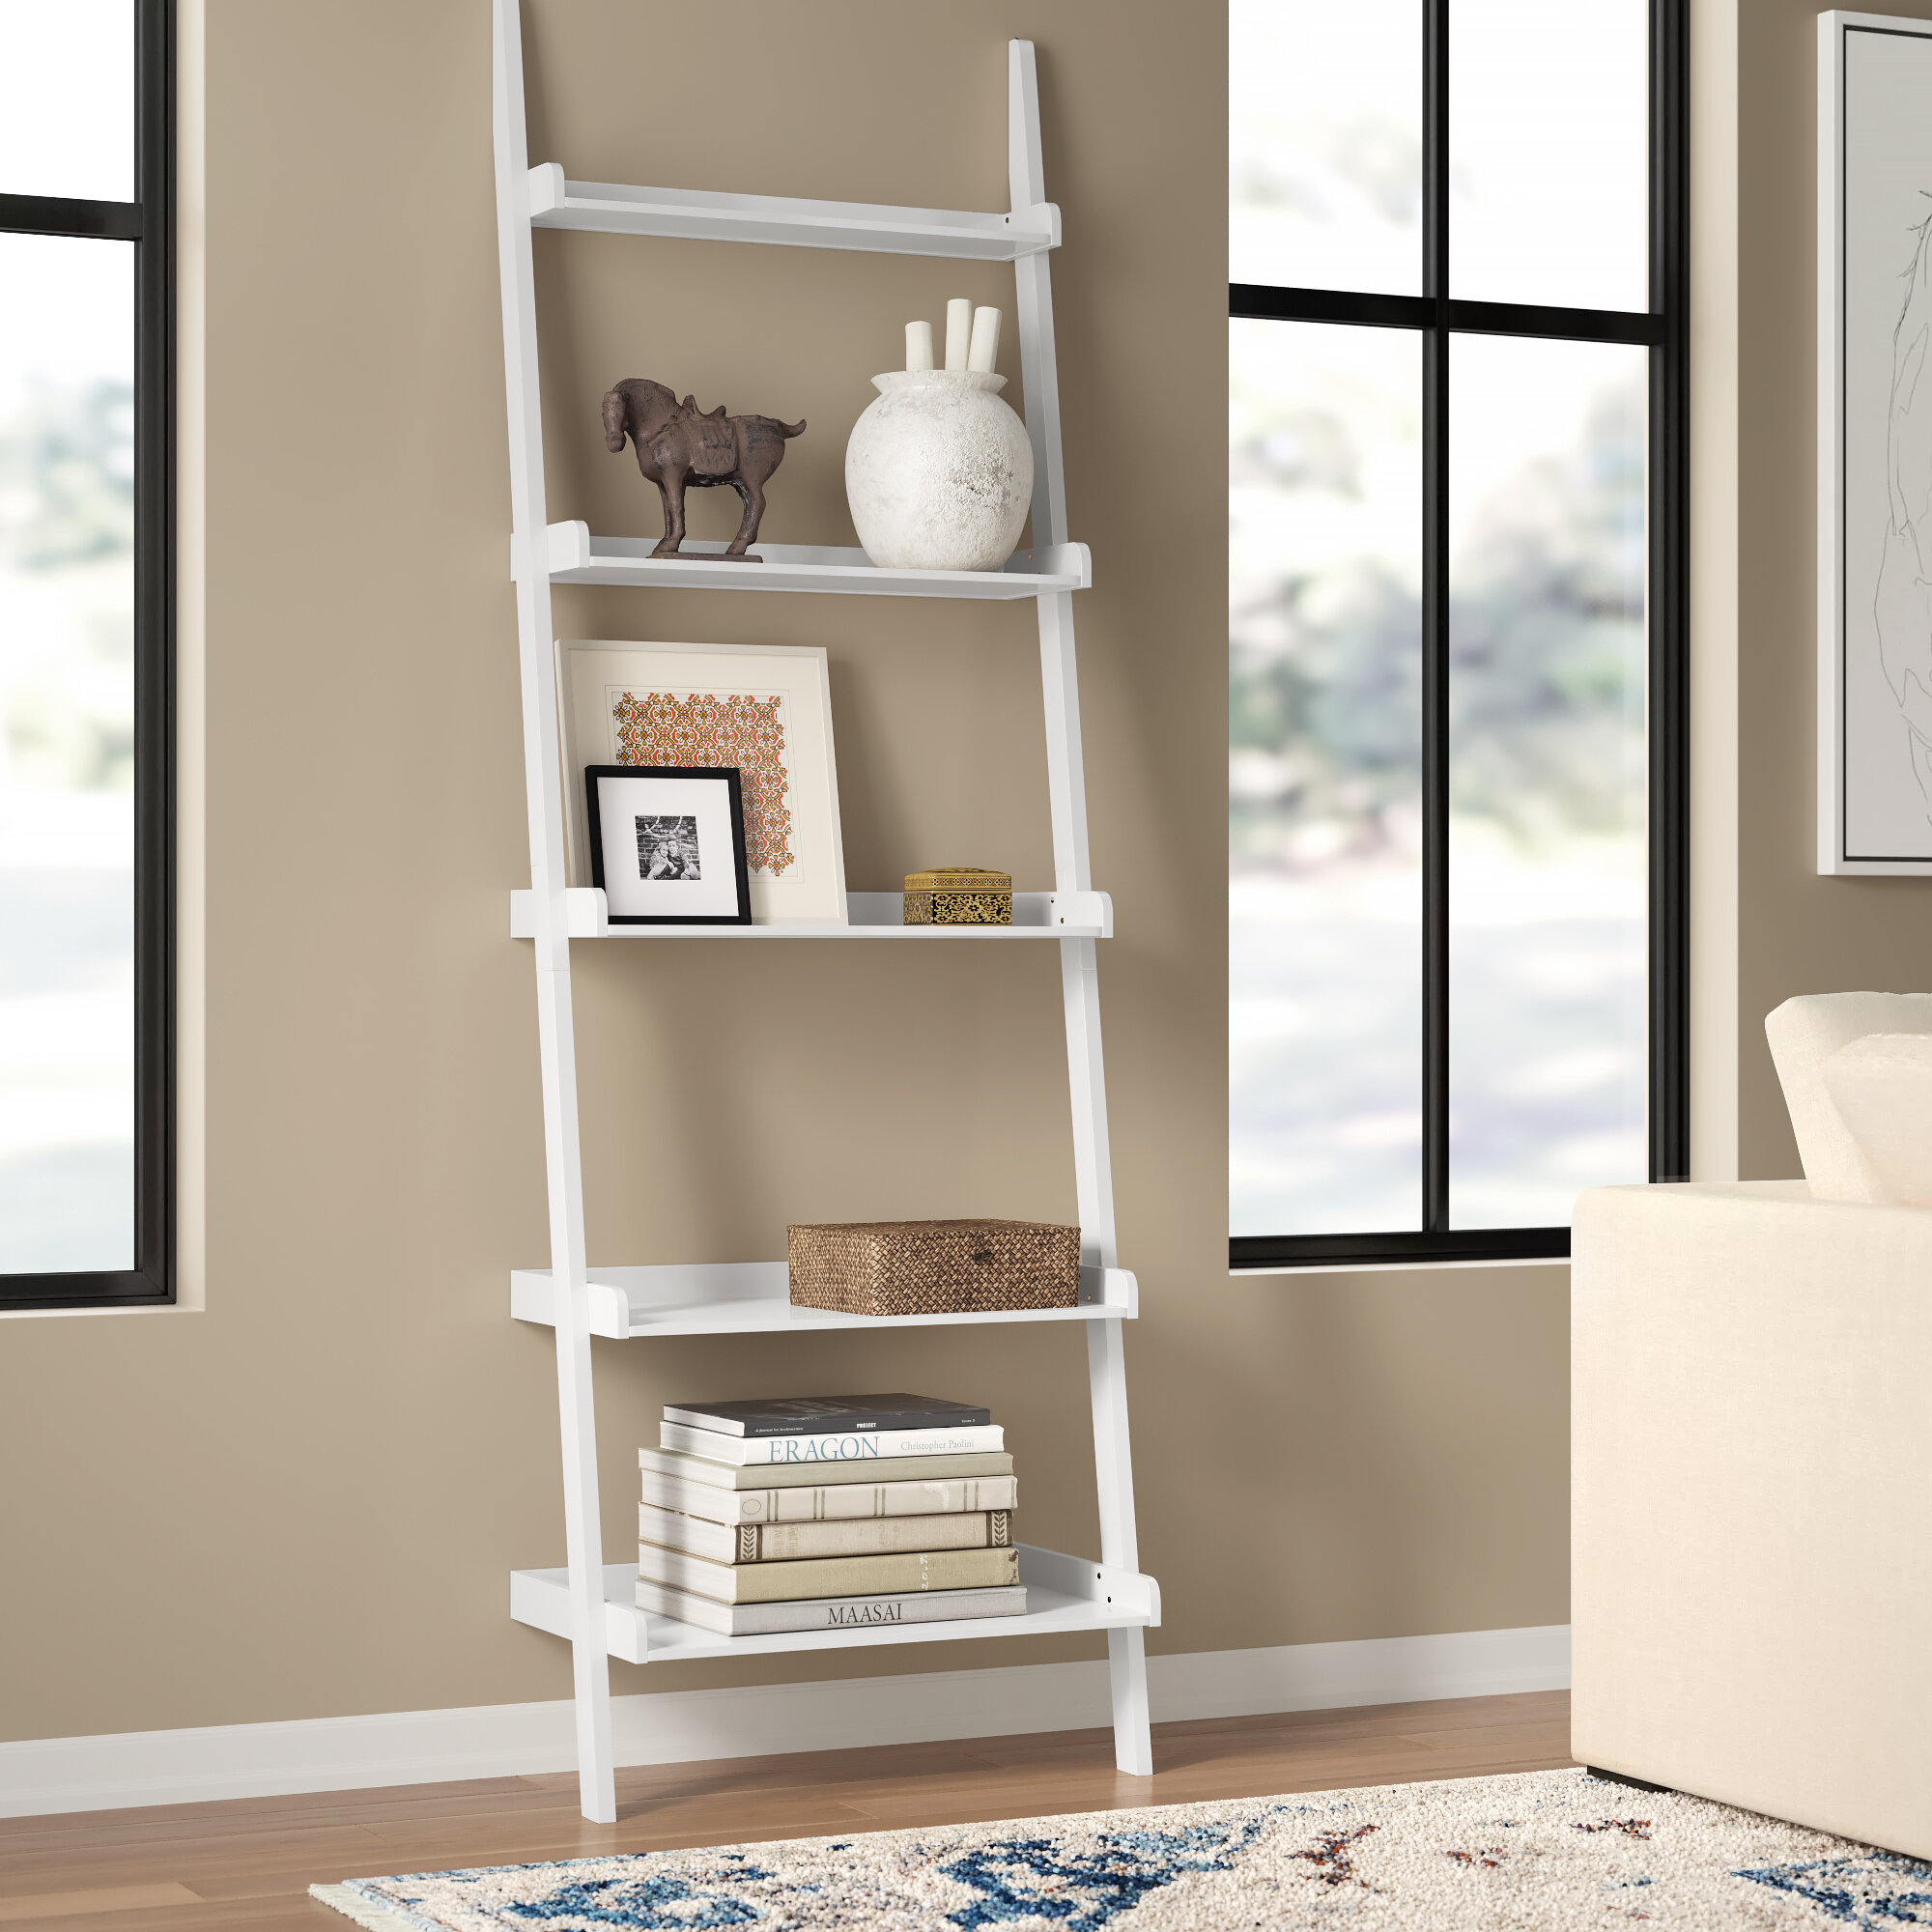 Lavish Home 5-Tier Ladder Bookshelf - Leaning Decorative Shelves, White